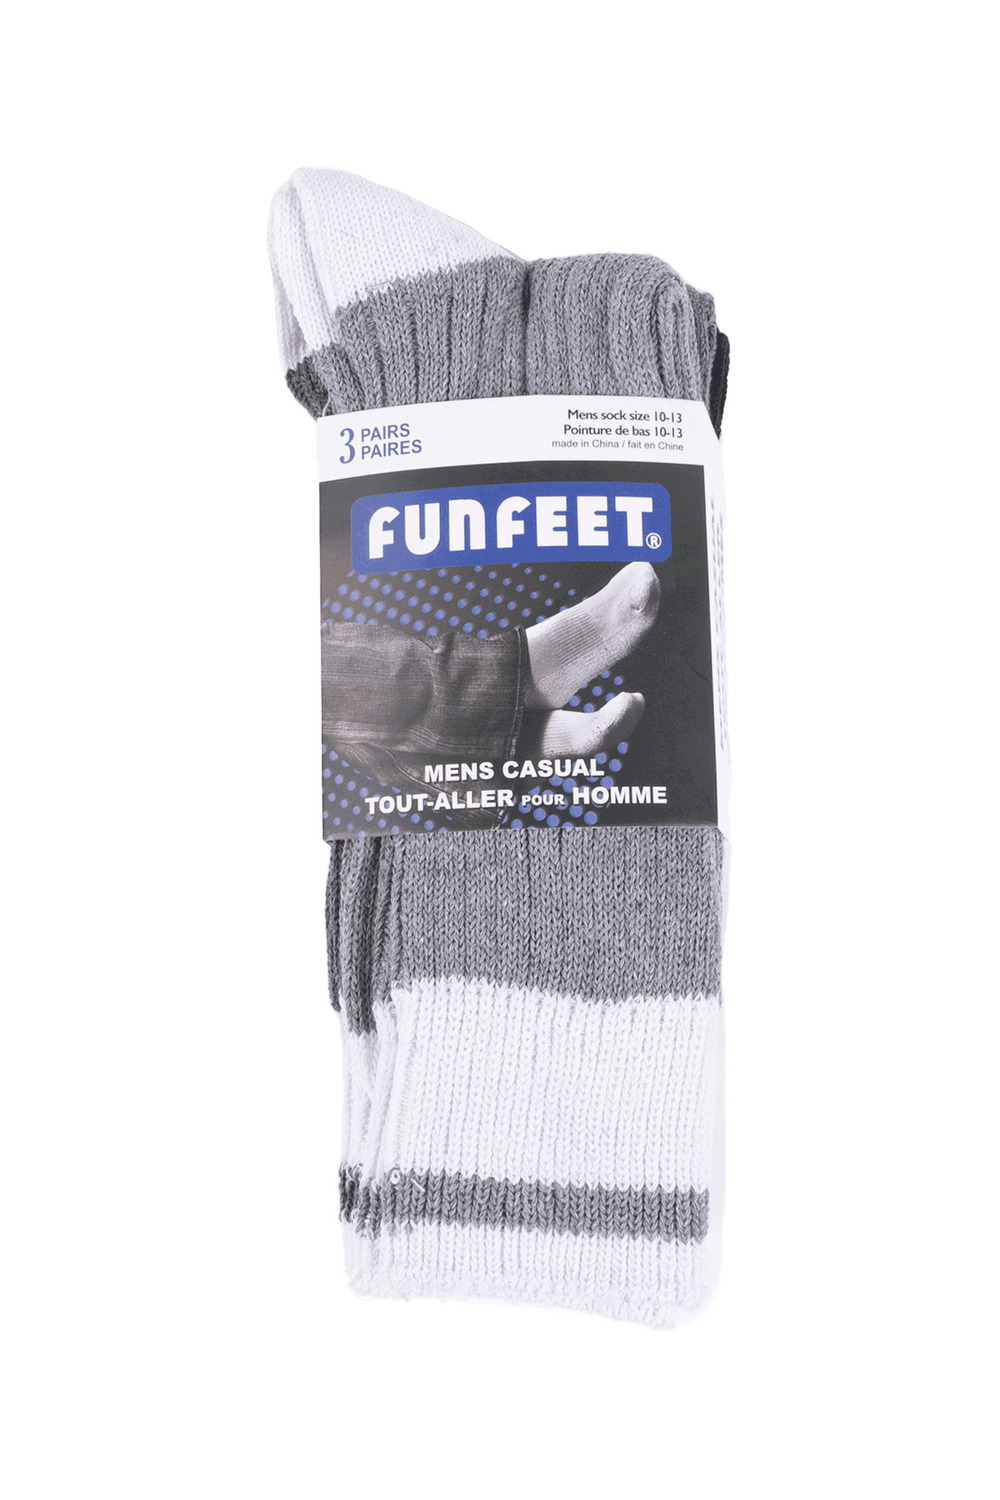 FunFeet - Men's casual wool blend socks, 3 pairs